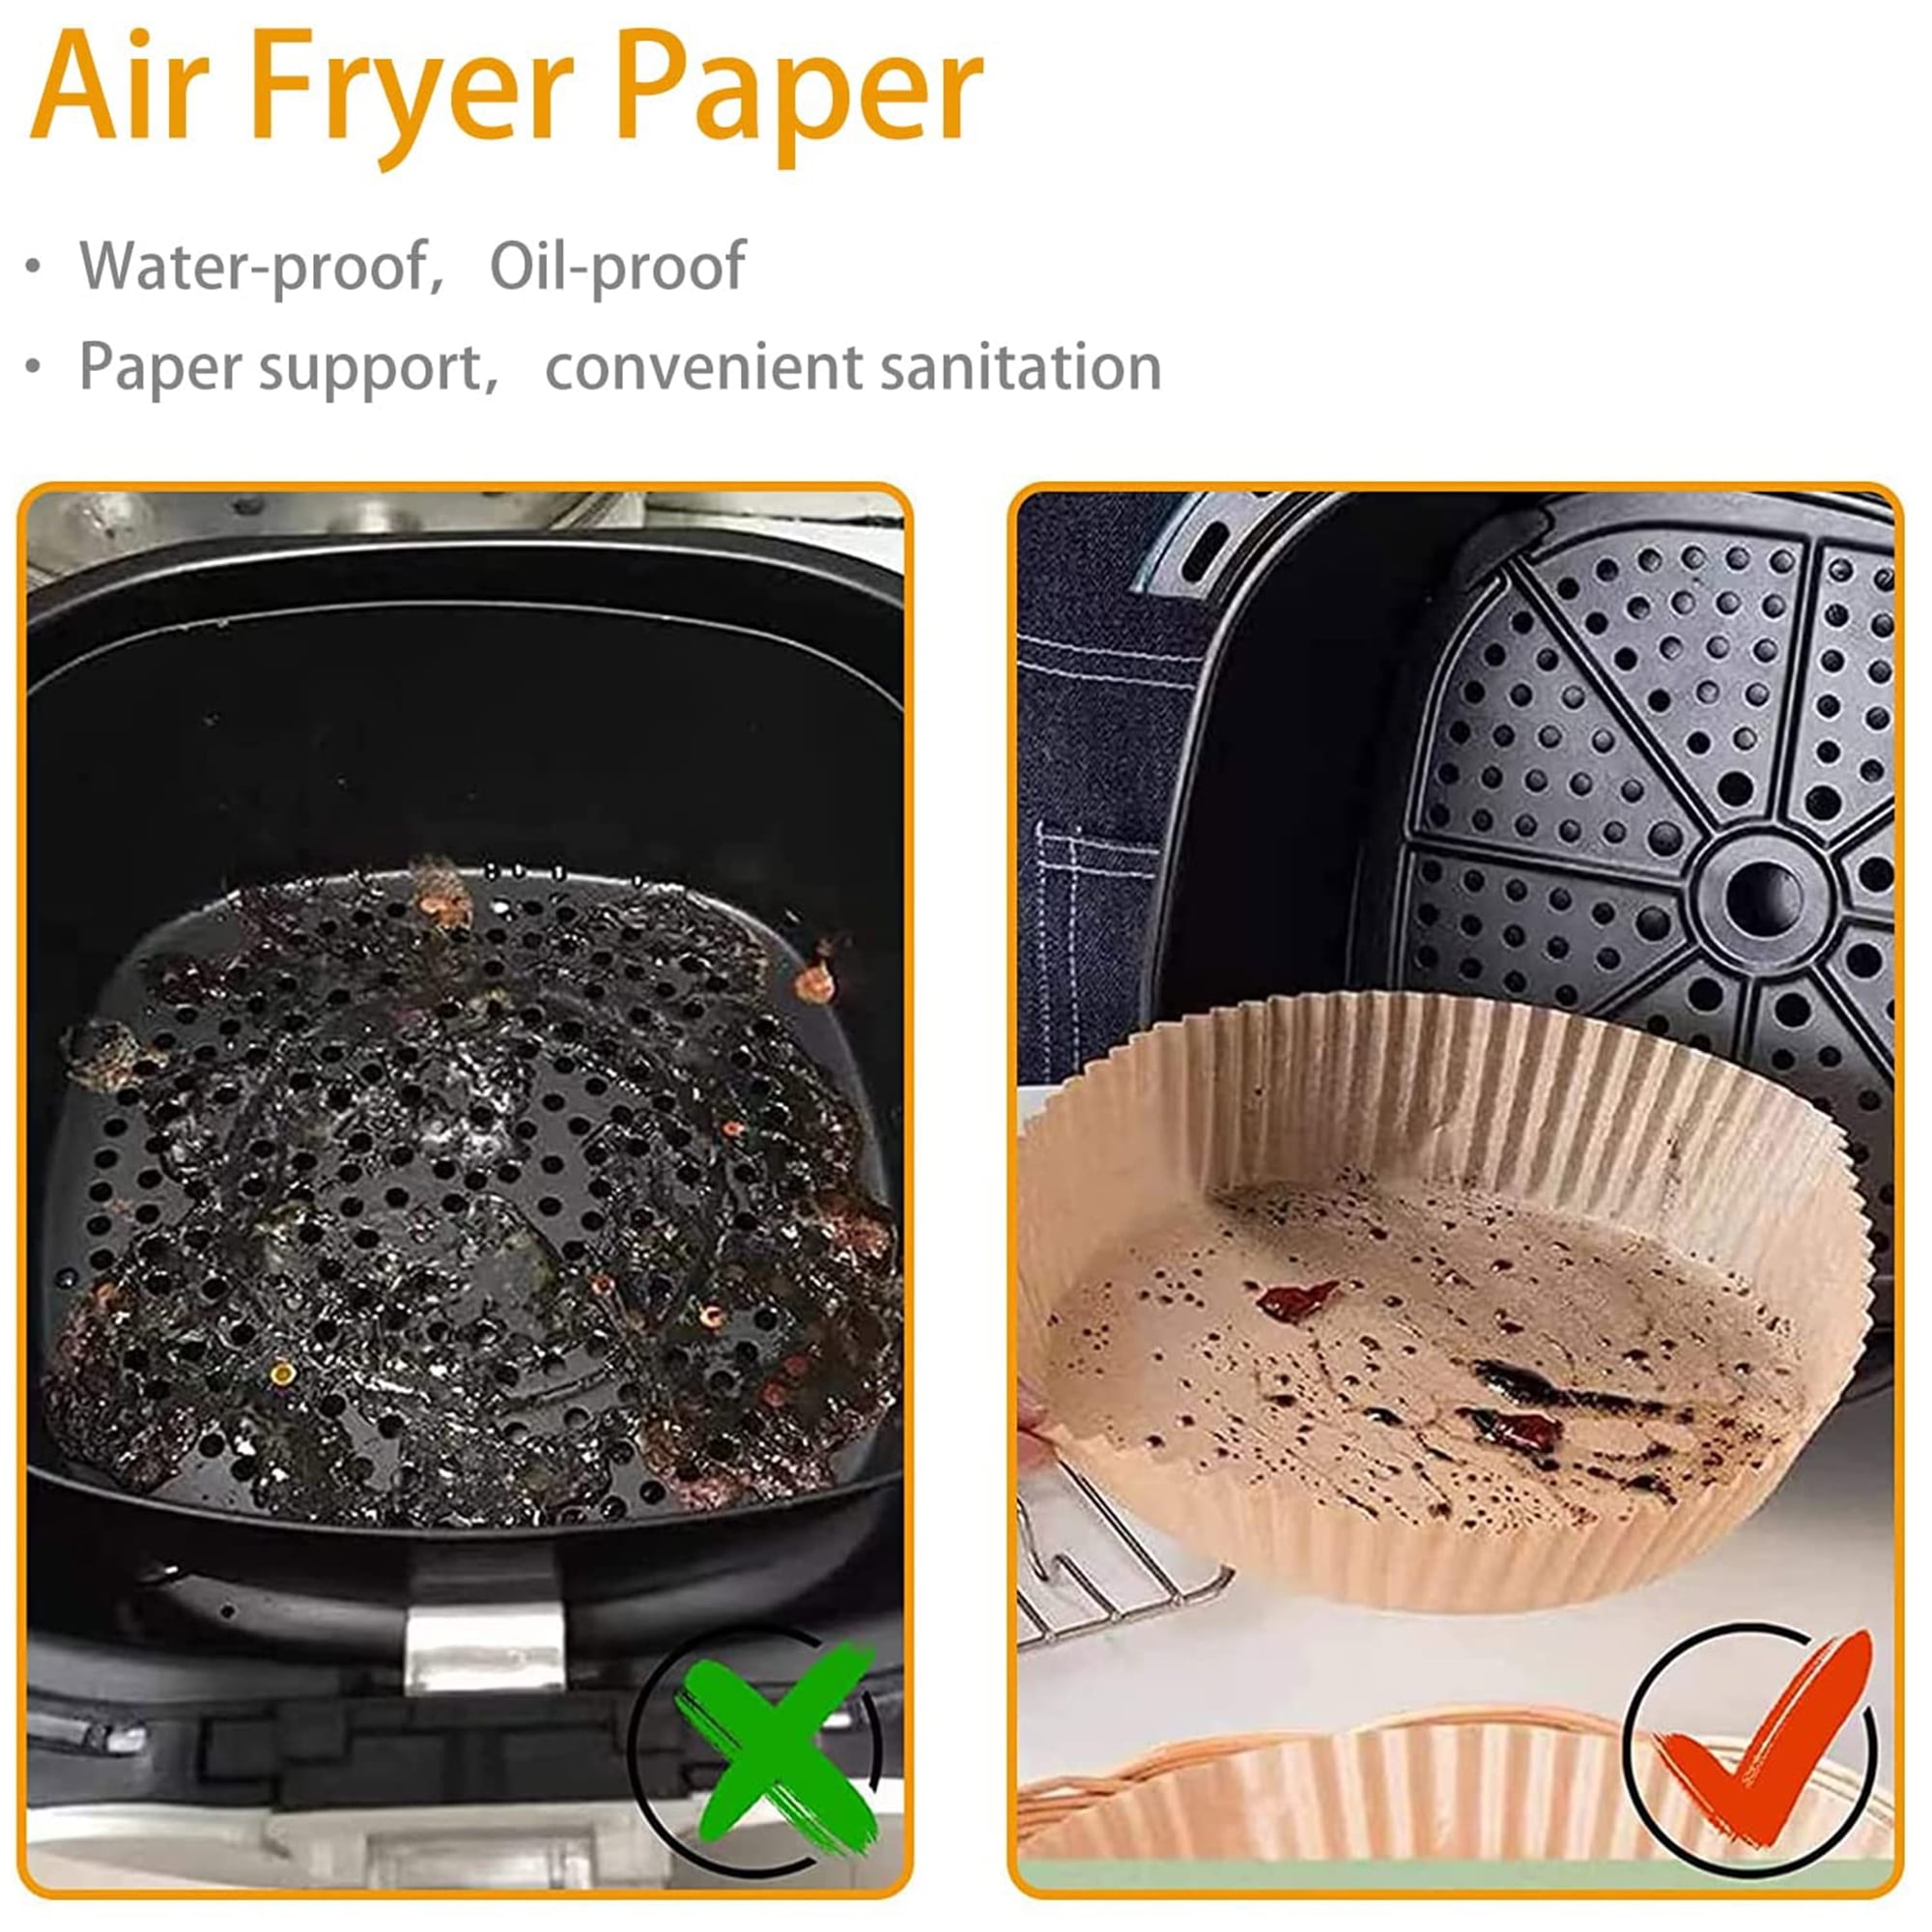 Elbourn Air Fryer Disposable Paper Liner 200pcs Cooking Paper for